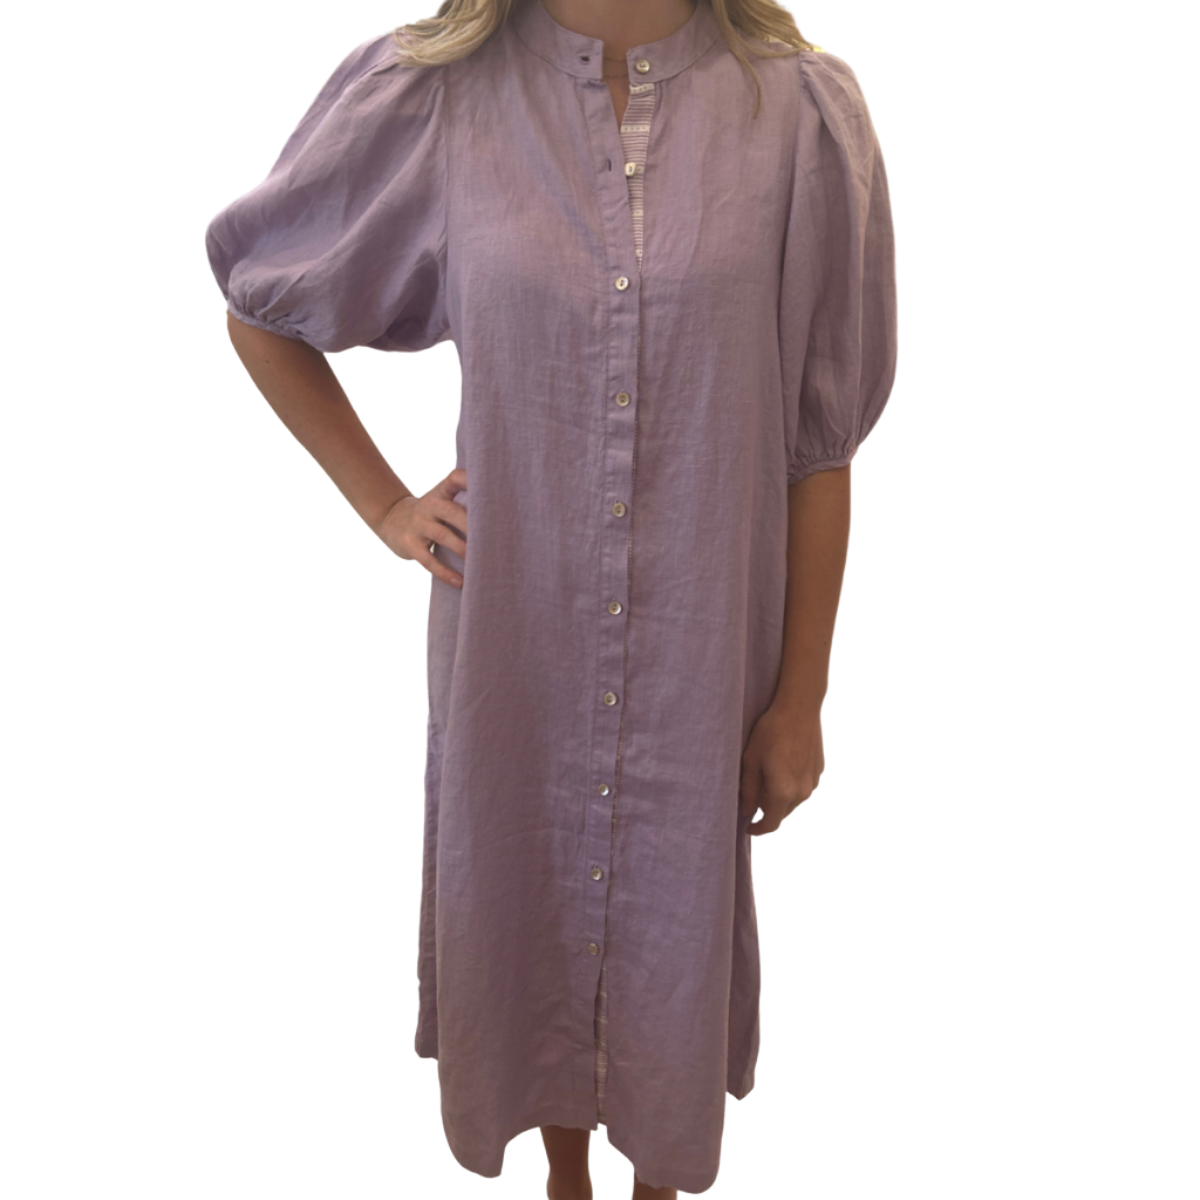 Lanhtroph Linen Dress - Bright Lilac